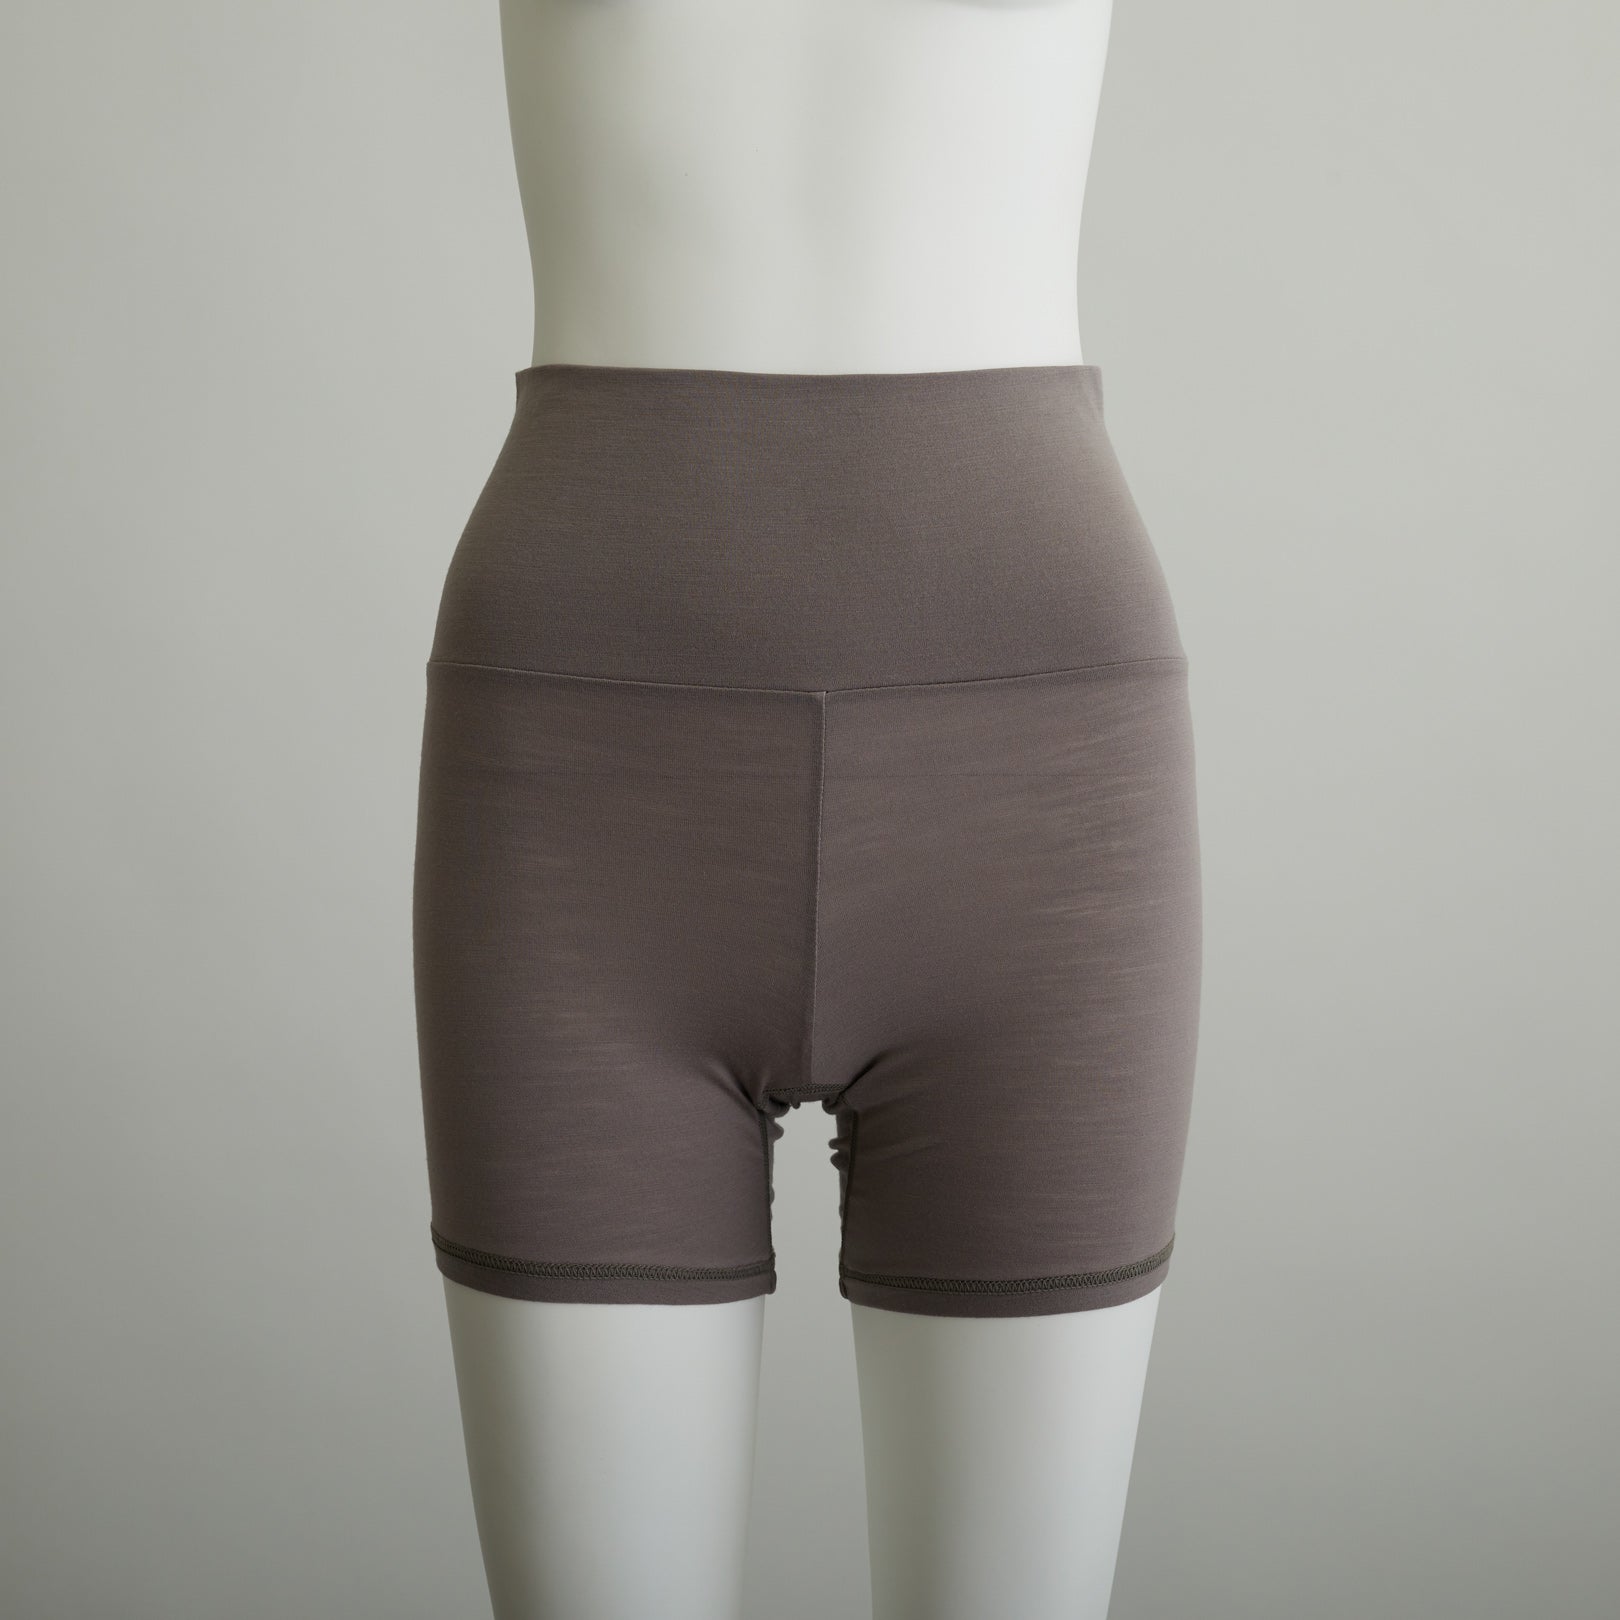 100% Merino Wool Jersey High Waist Shorts in Taupe (2022 model)